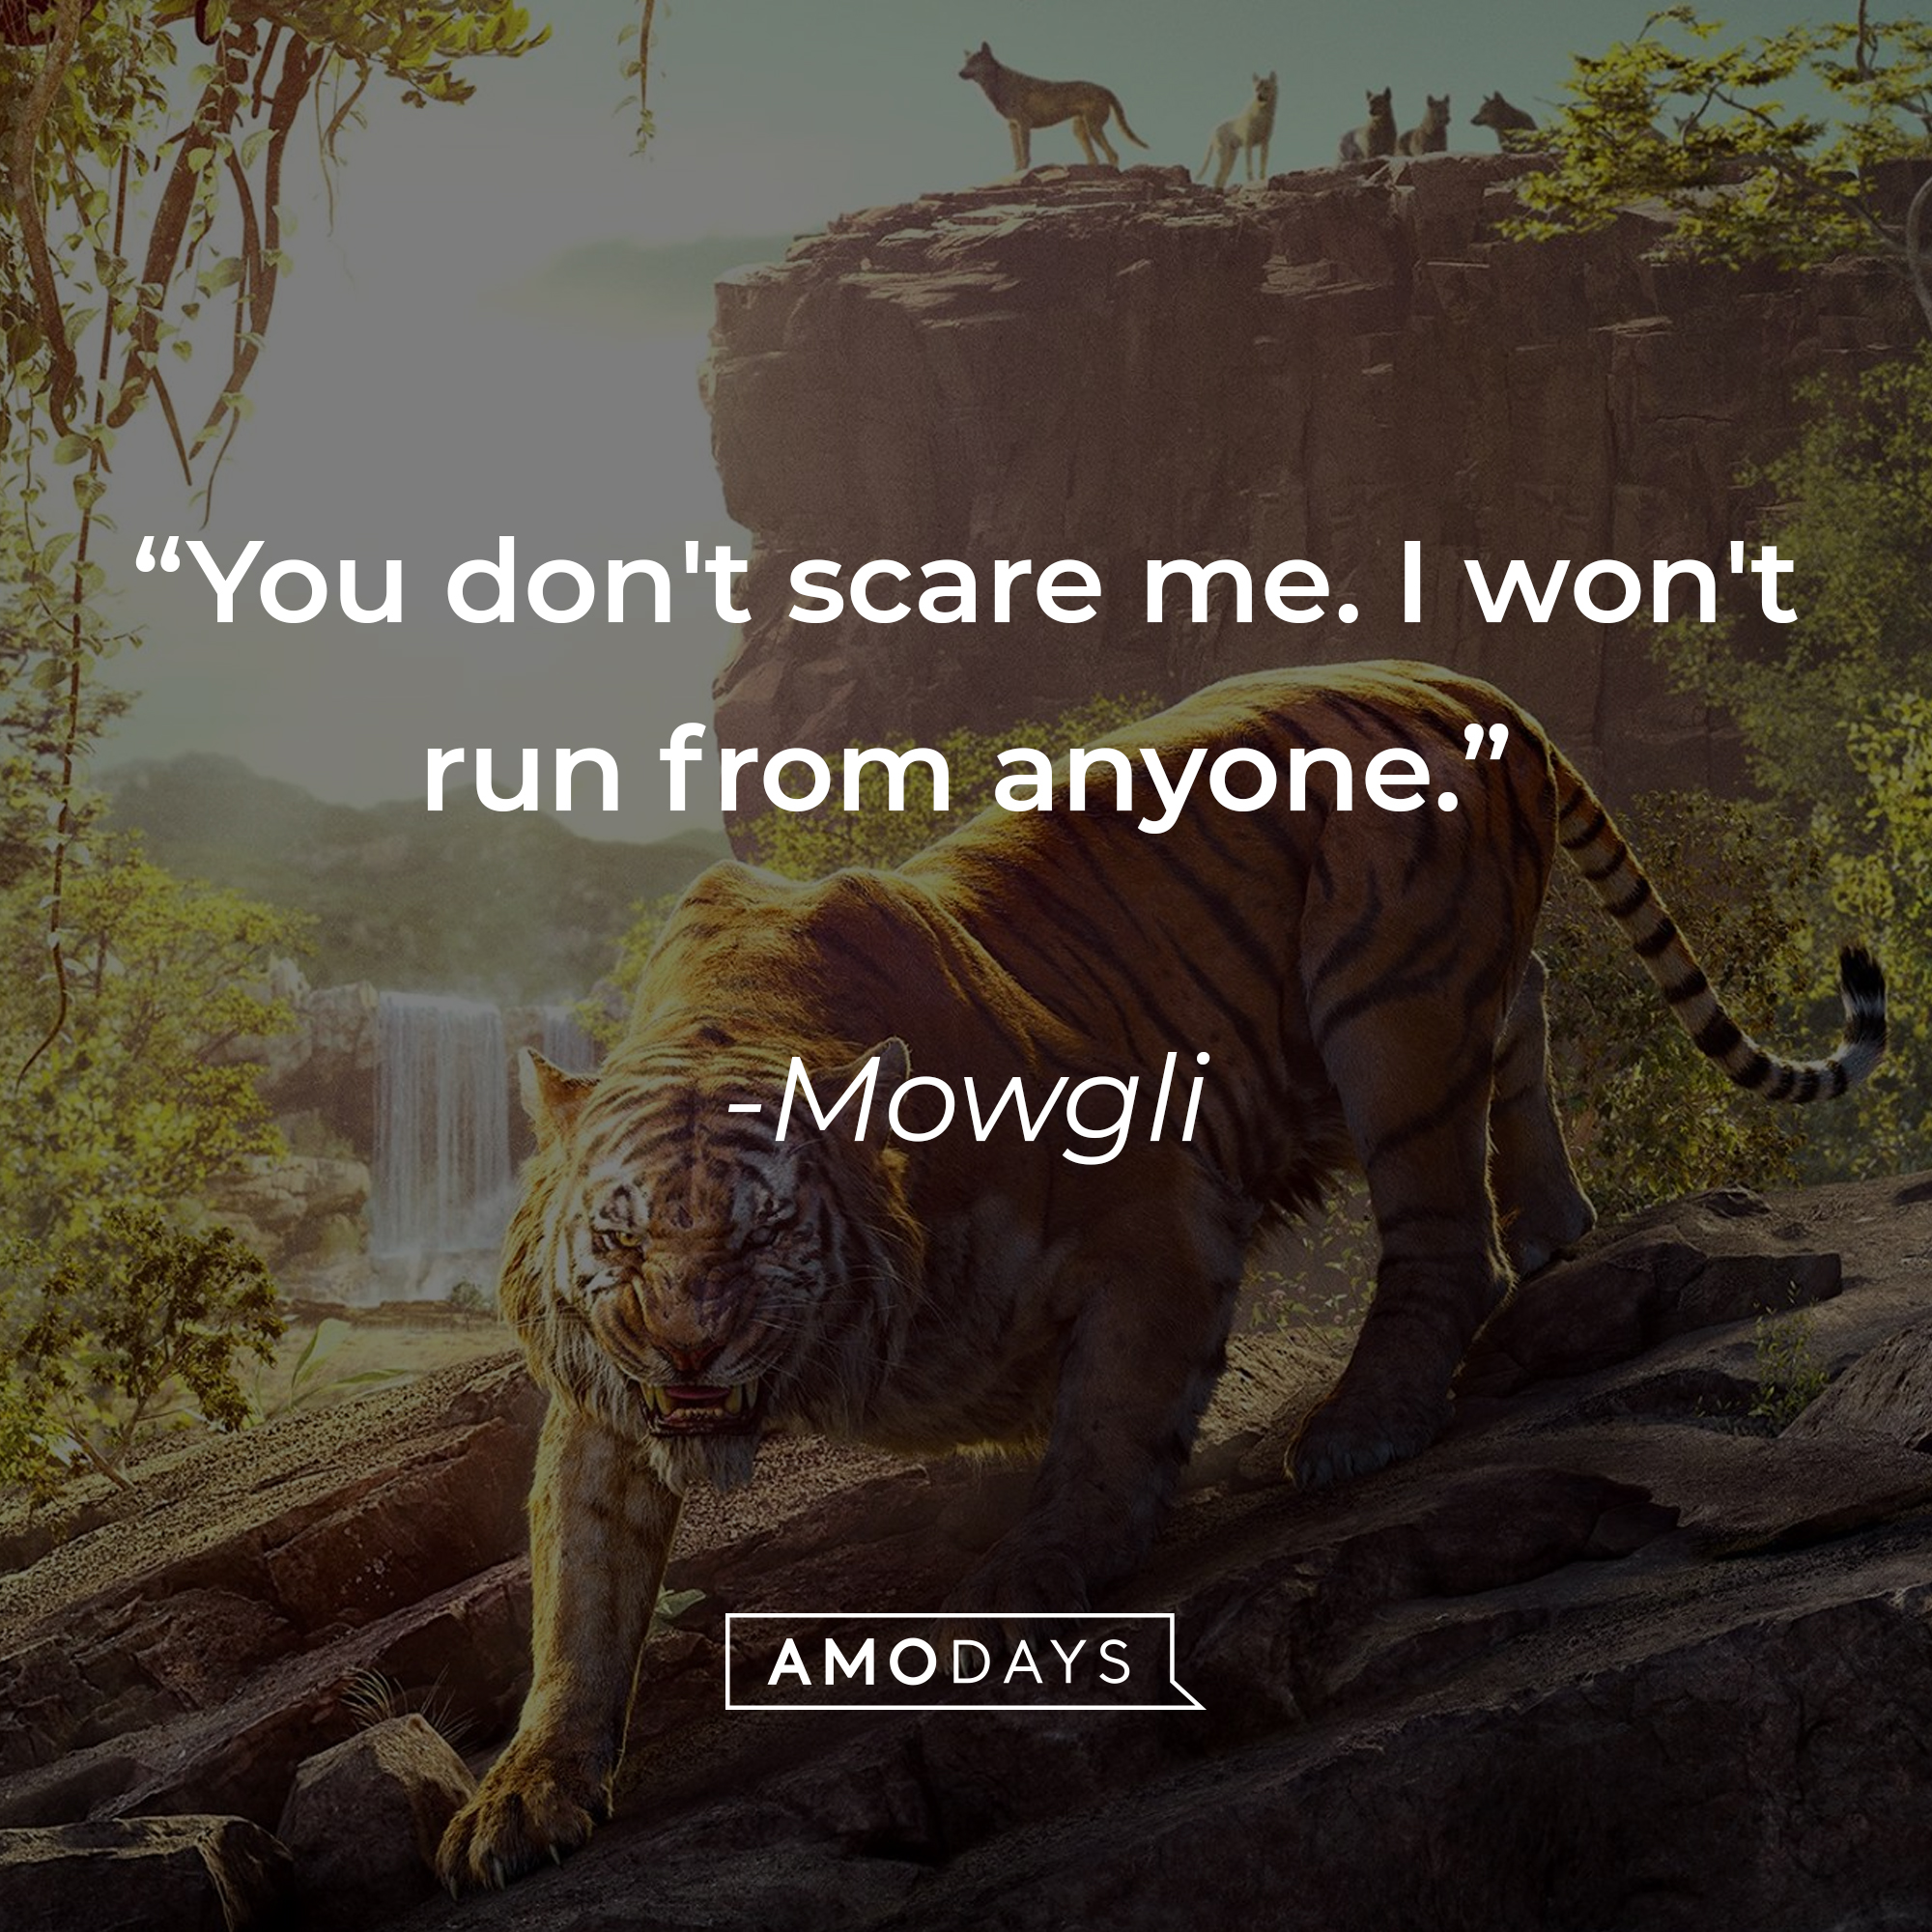 Mowgli's quote: "You don't scare me. I won't run from anyone." | Source: facebook.com/DisneyJungleBook